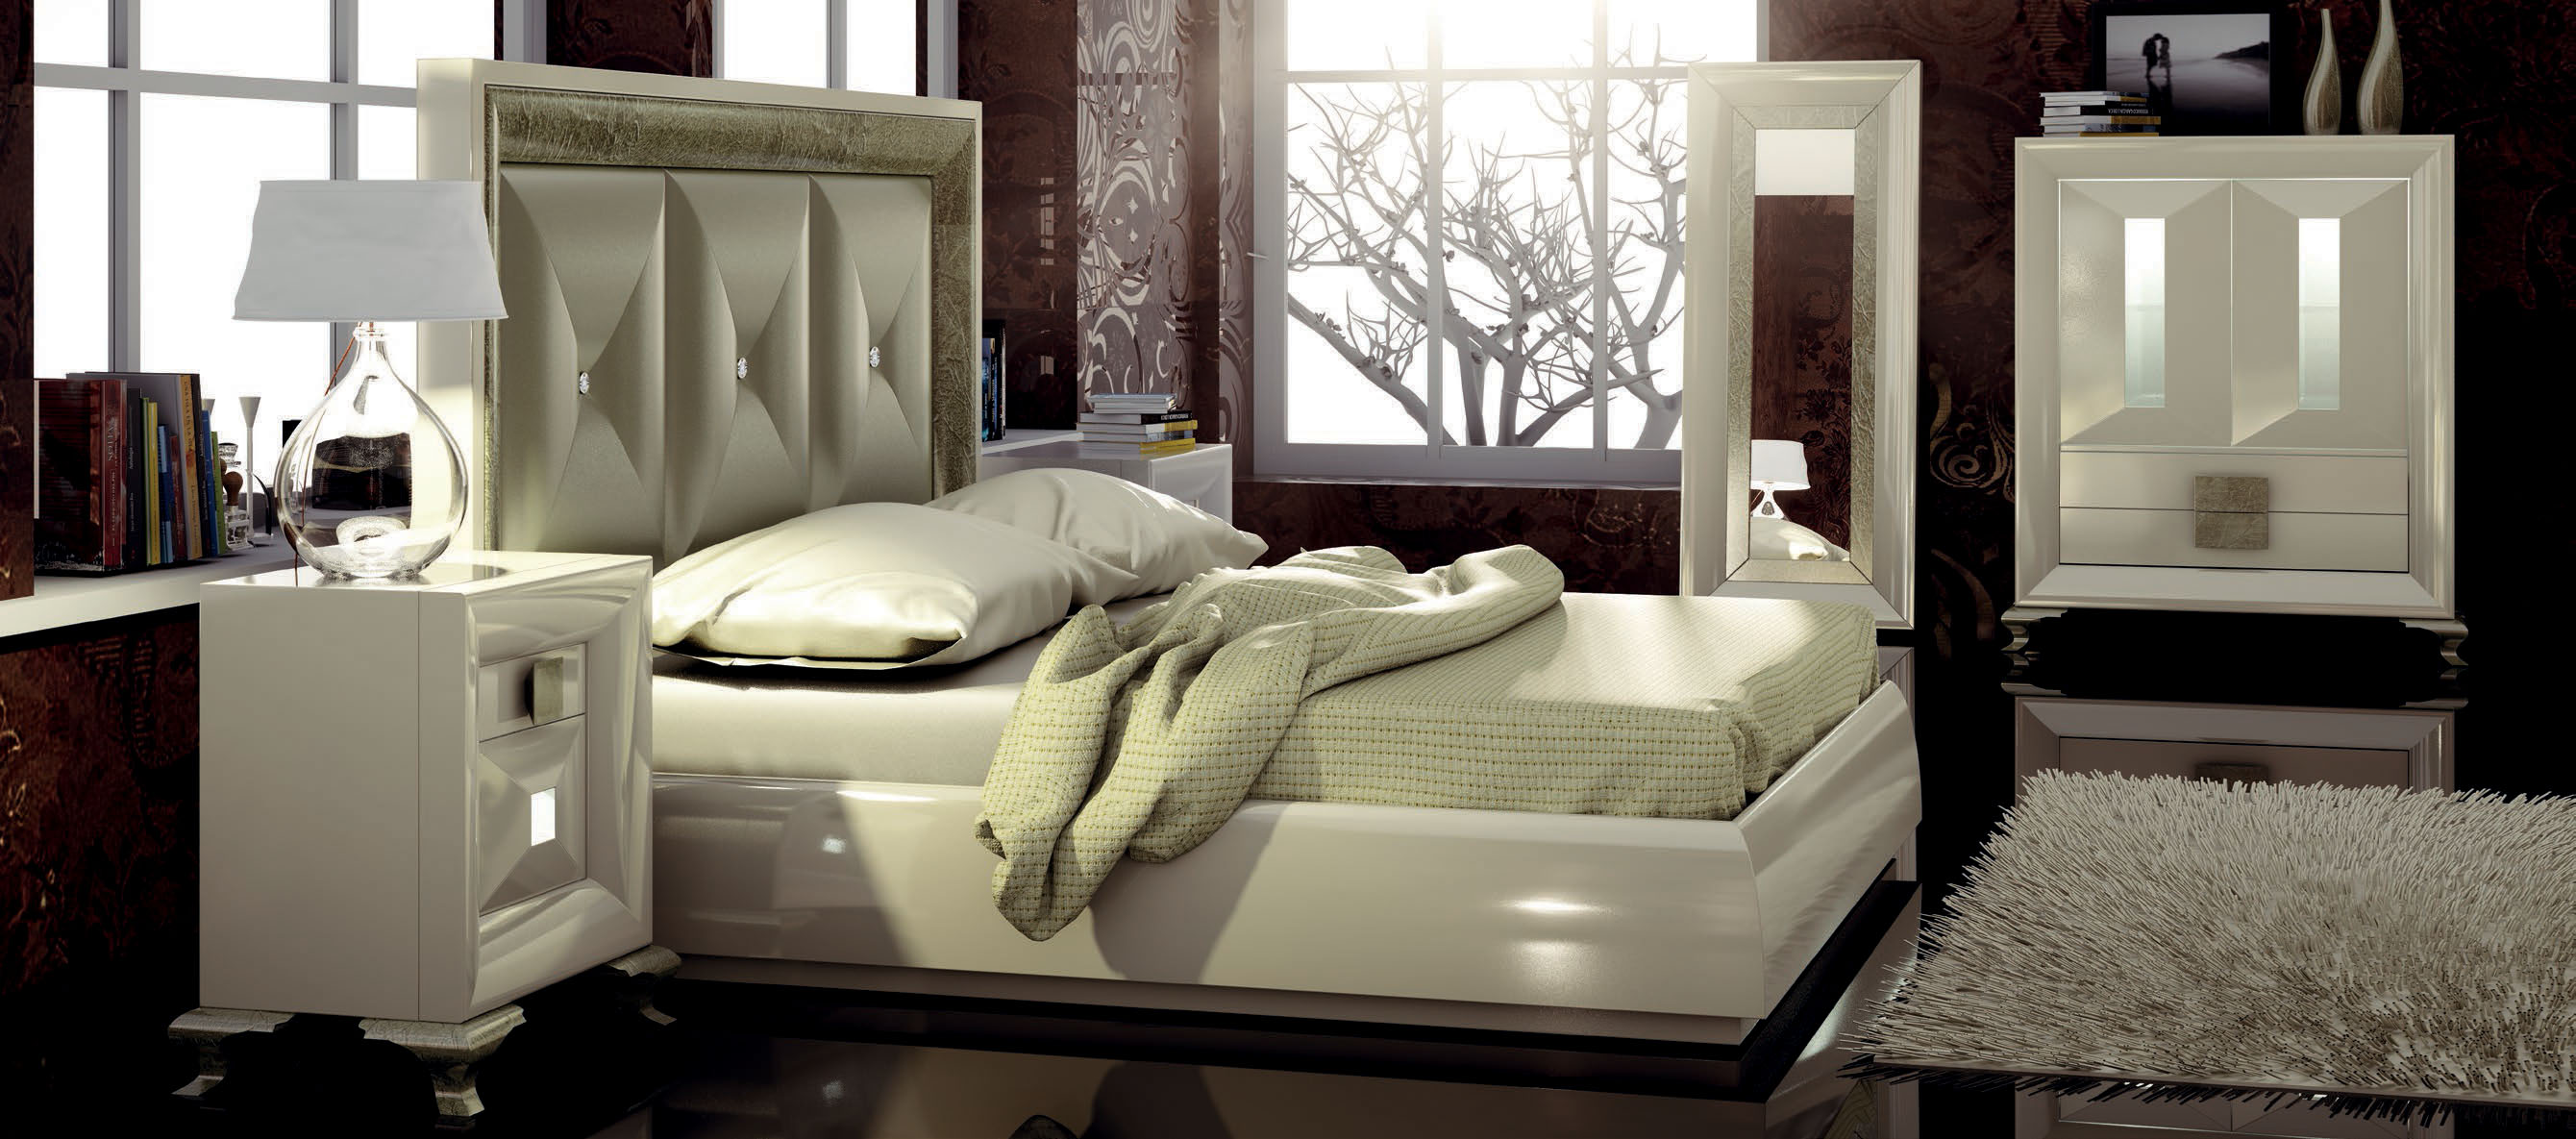 Brands Franco Furniture Bedrooms vol3, Spain DOR 145